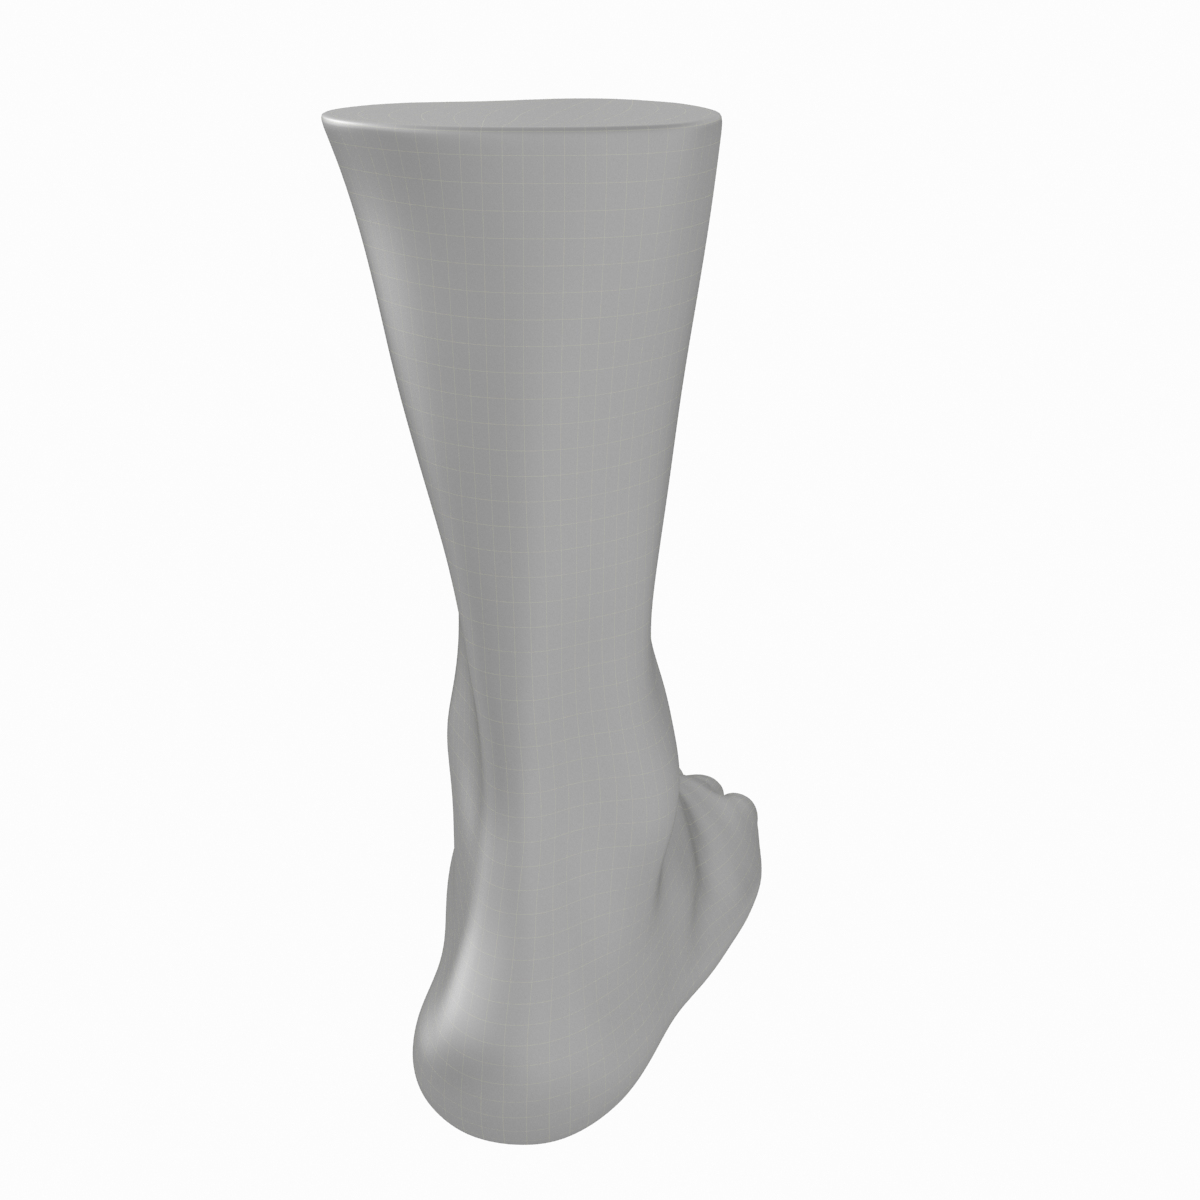 Human male feet based 3D model - TurboSquid 1470752